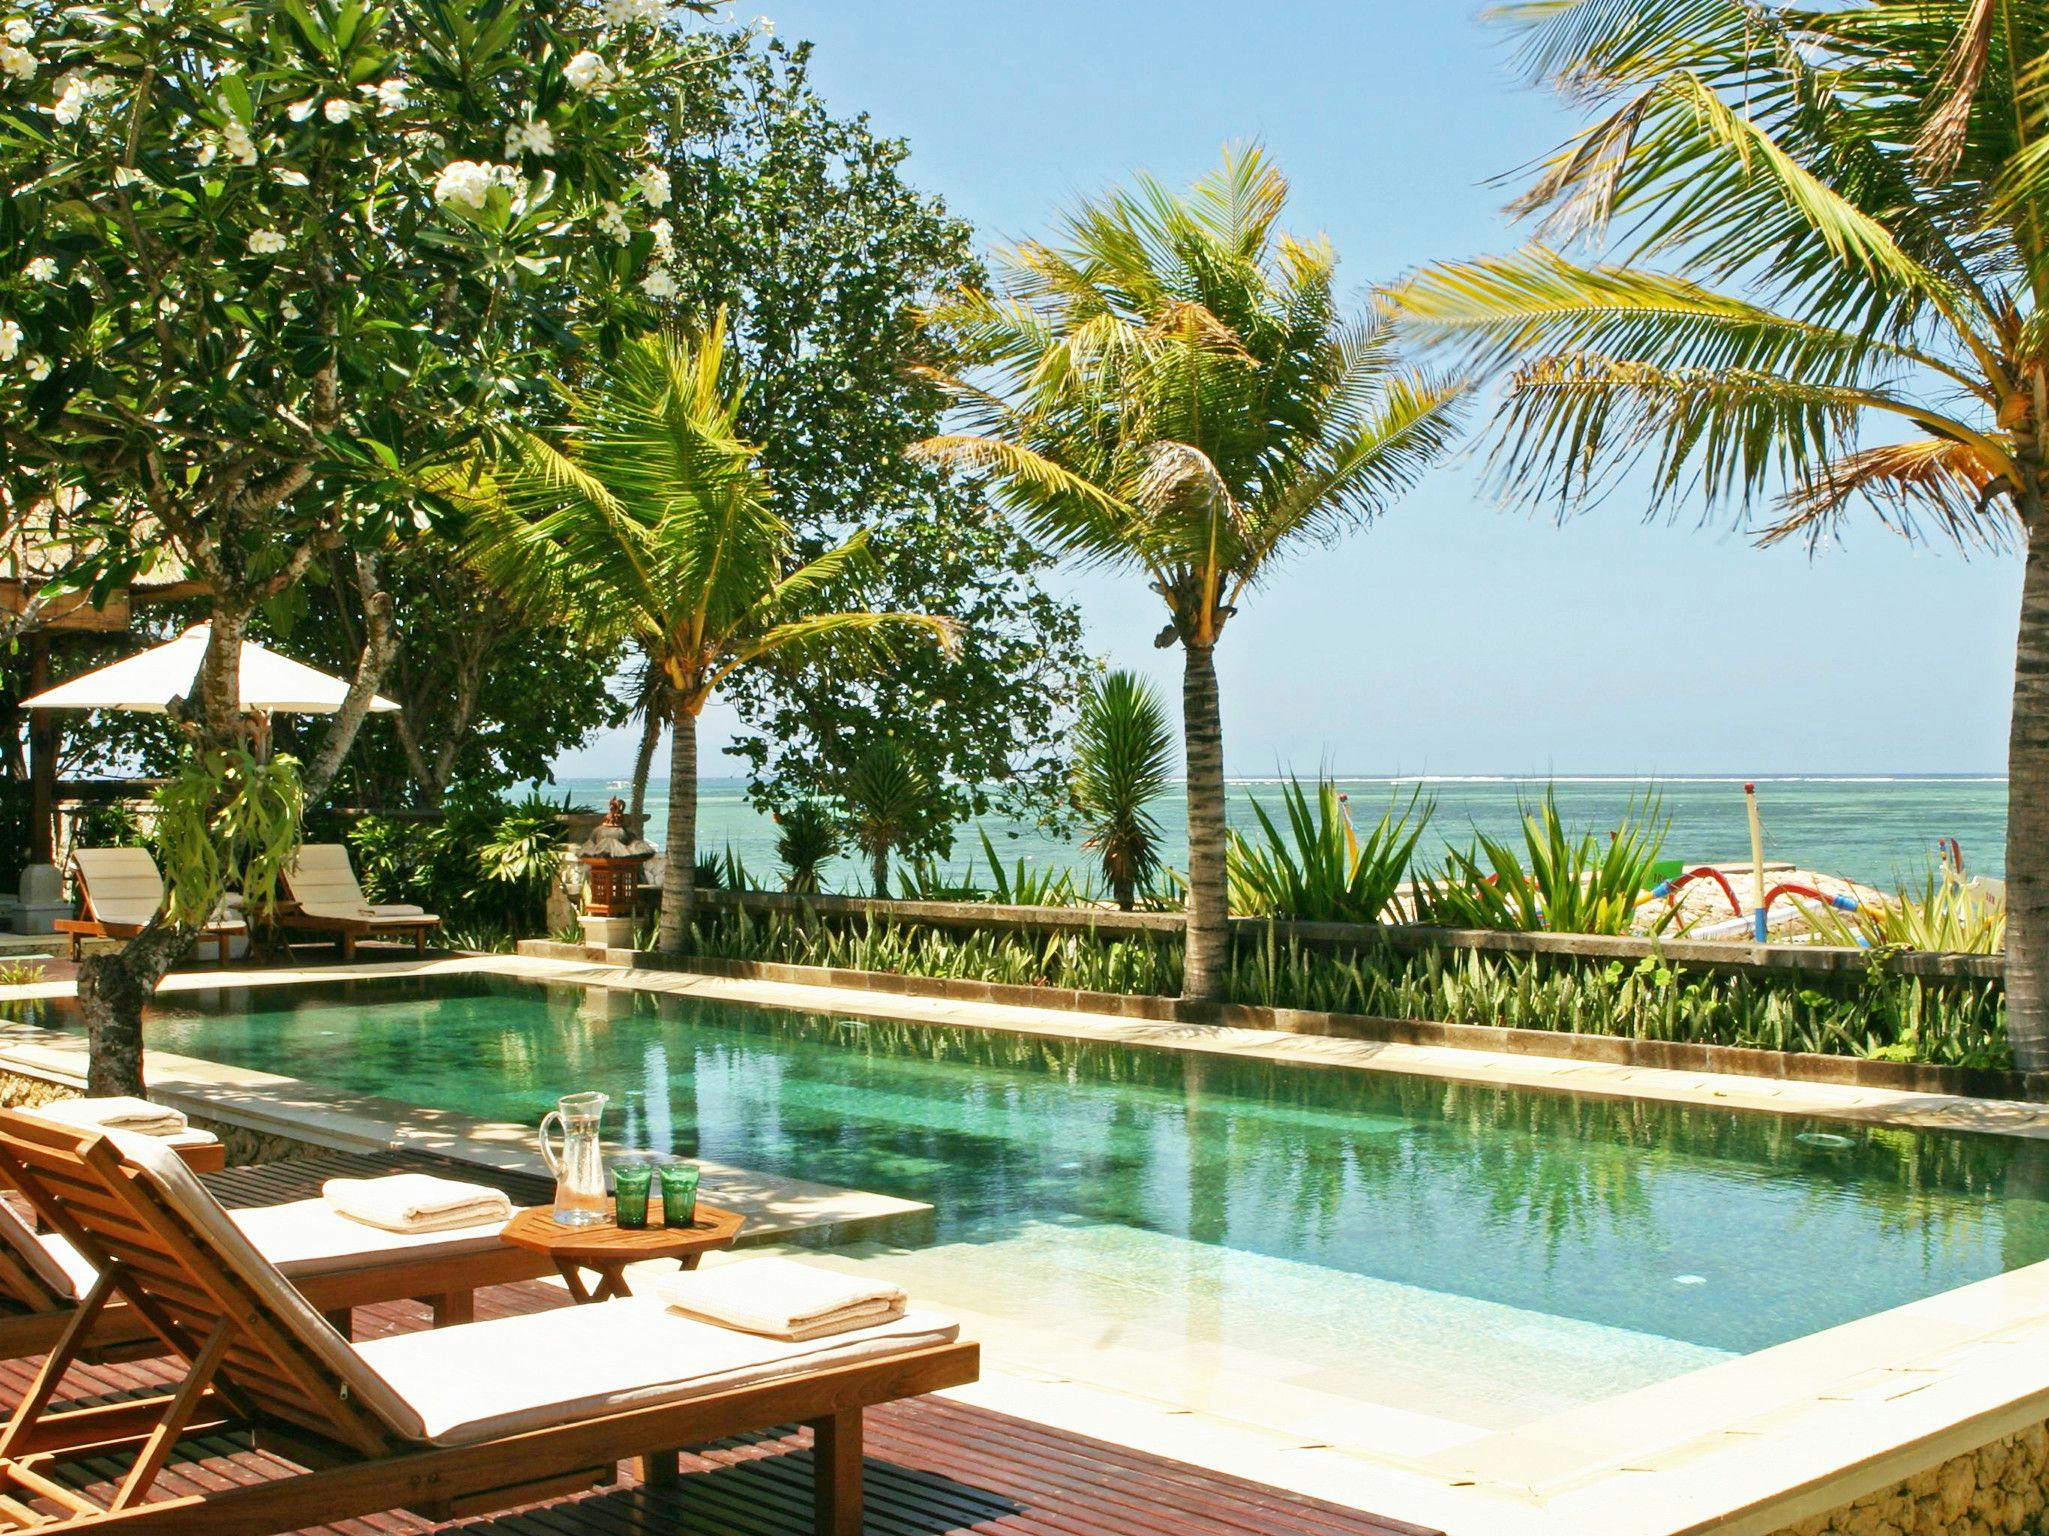 Sanur Ketewel 5728 - Villa Cemara in Bali Indonesia